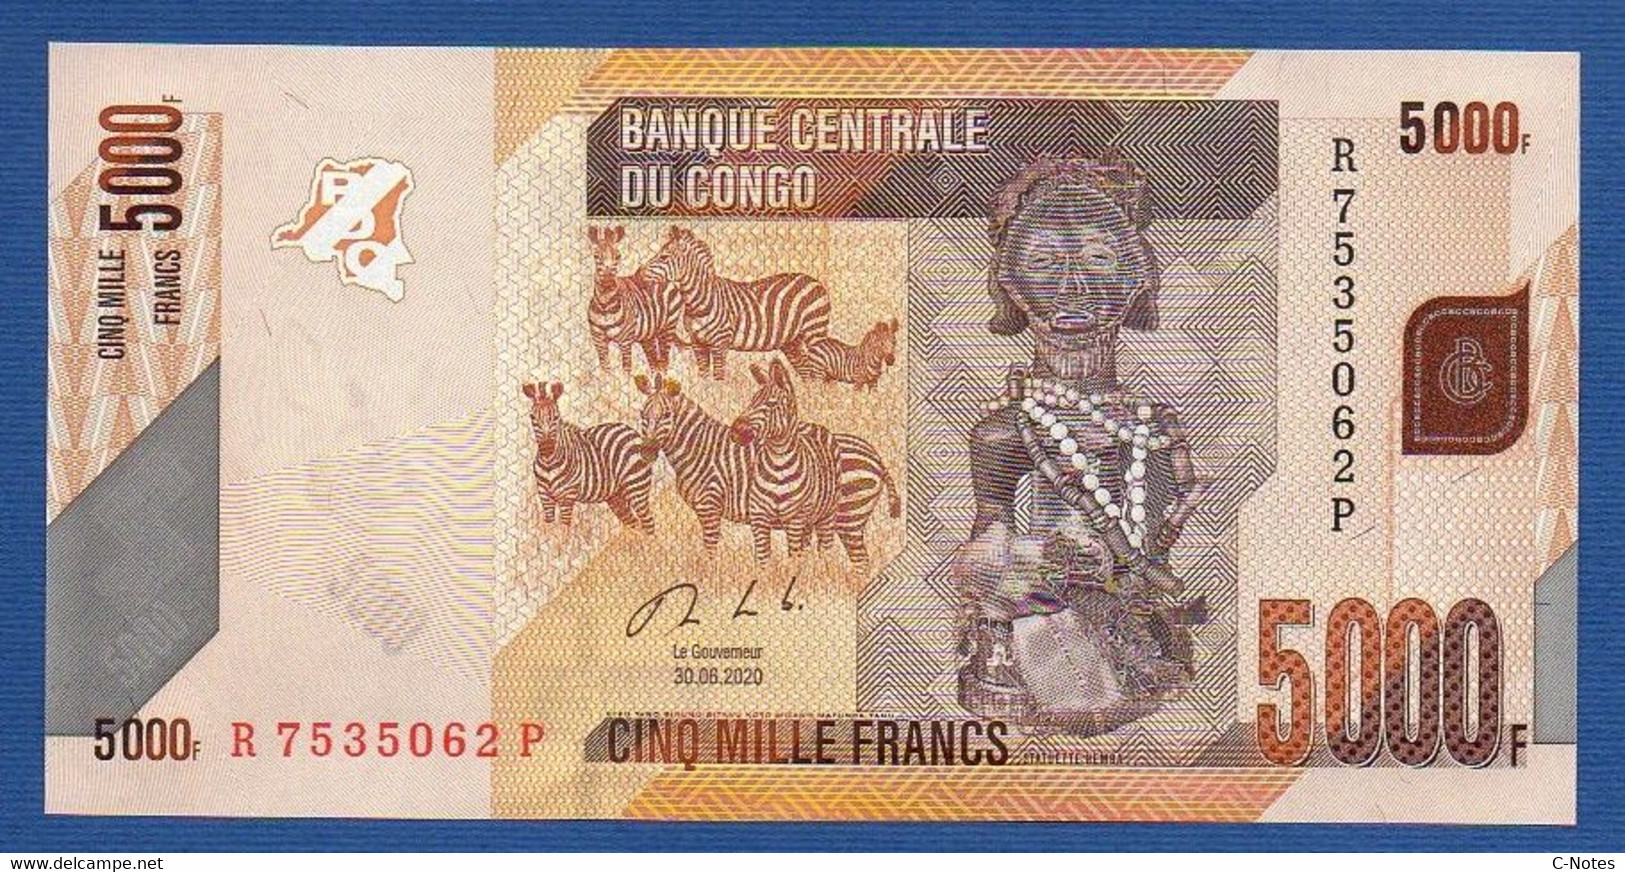 CONGO Democratic Republic - P.102c – 5000 5.000 FRANCS 2020 UNC, Serie R 7535062 P - Demokratische Republik Kongo & Zaire